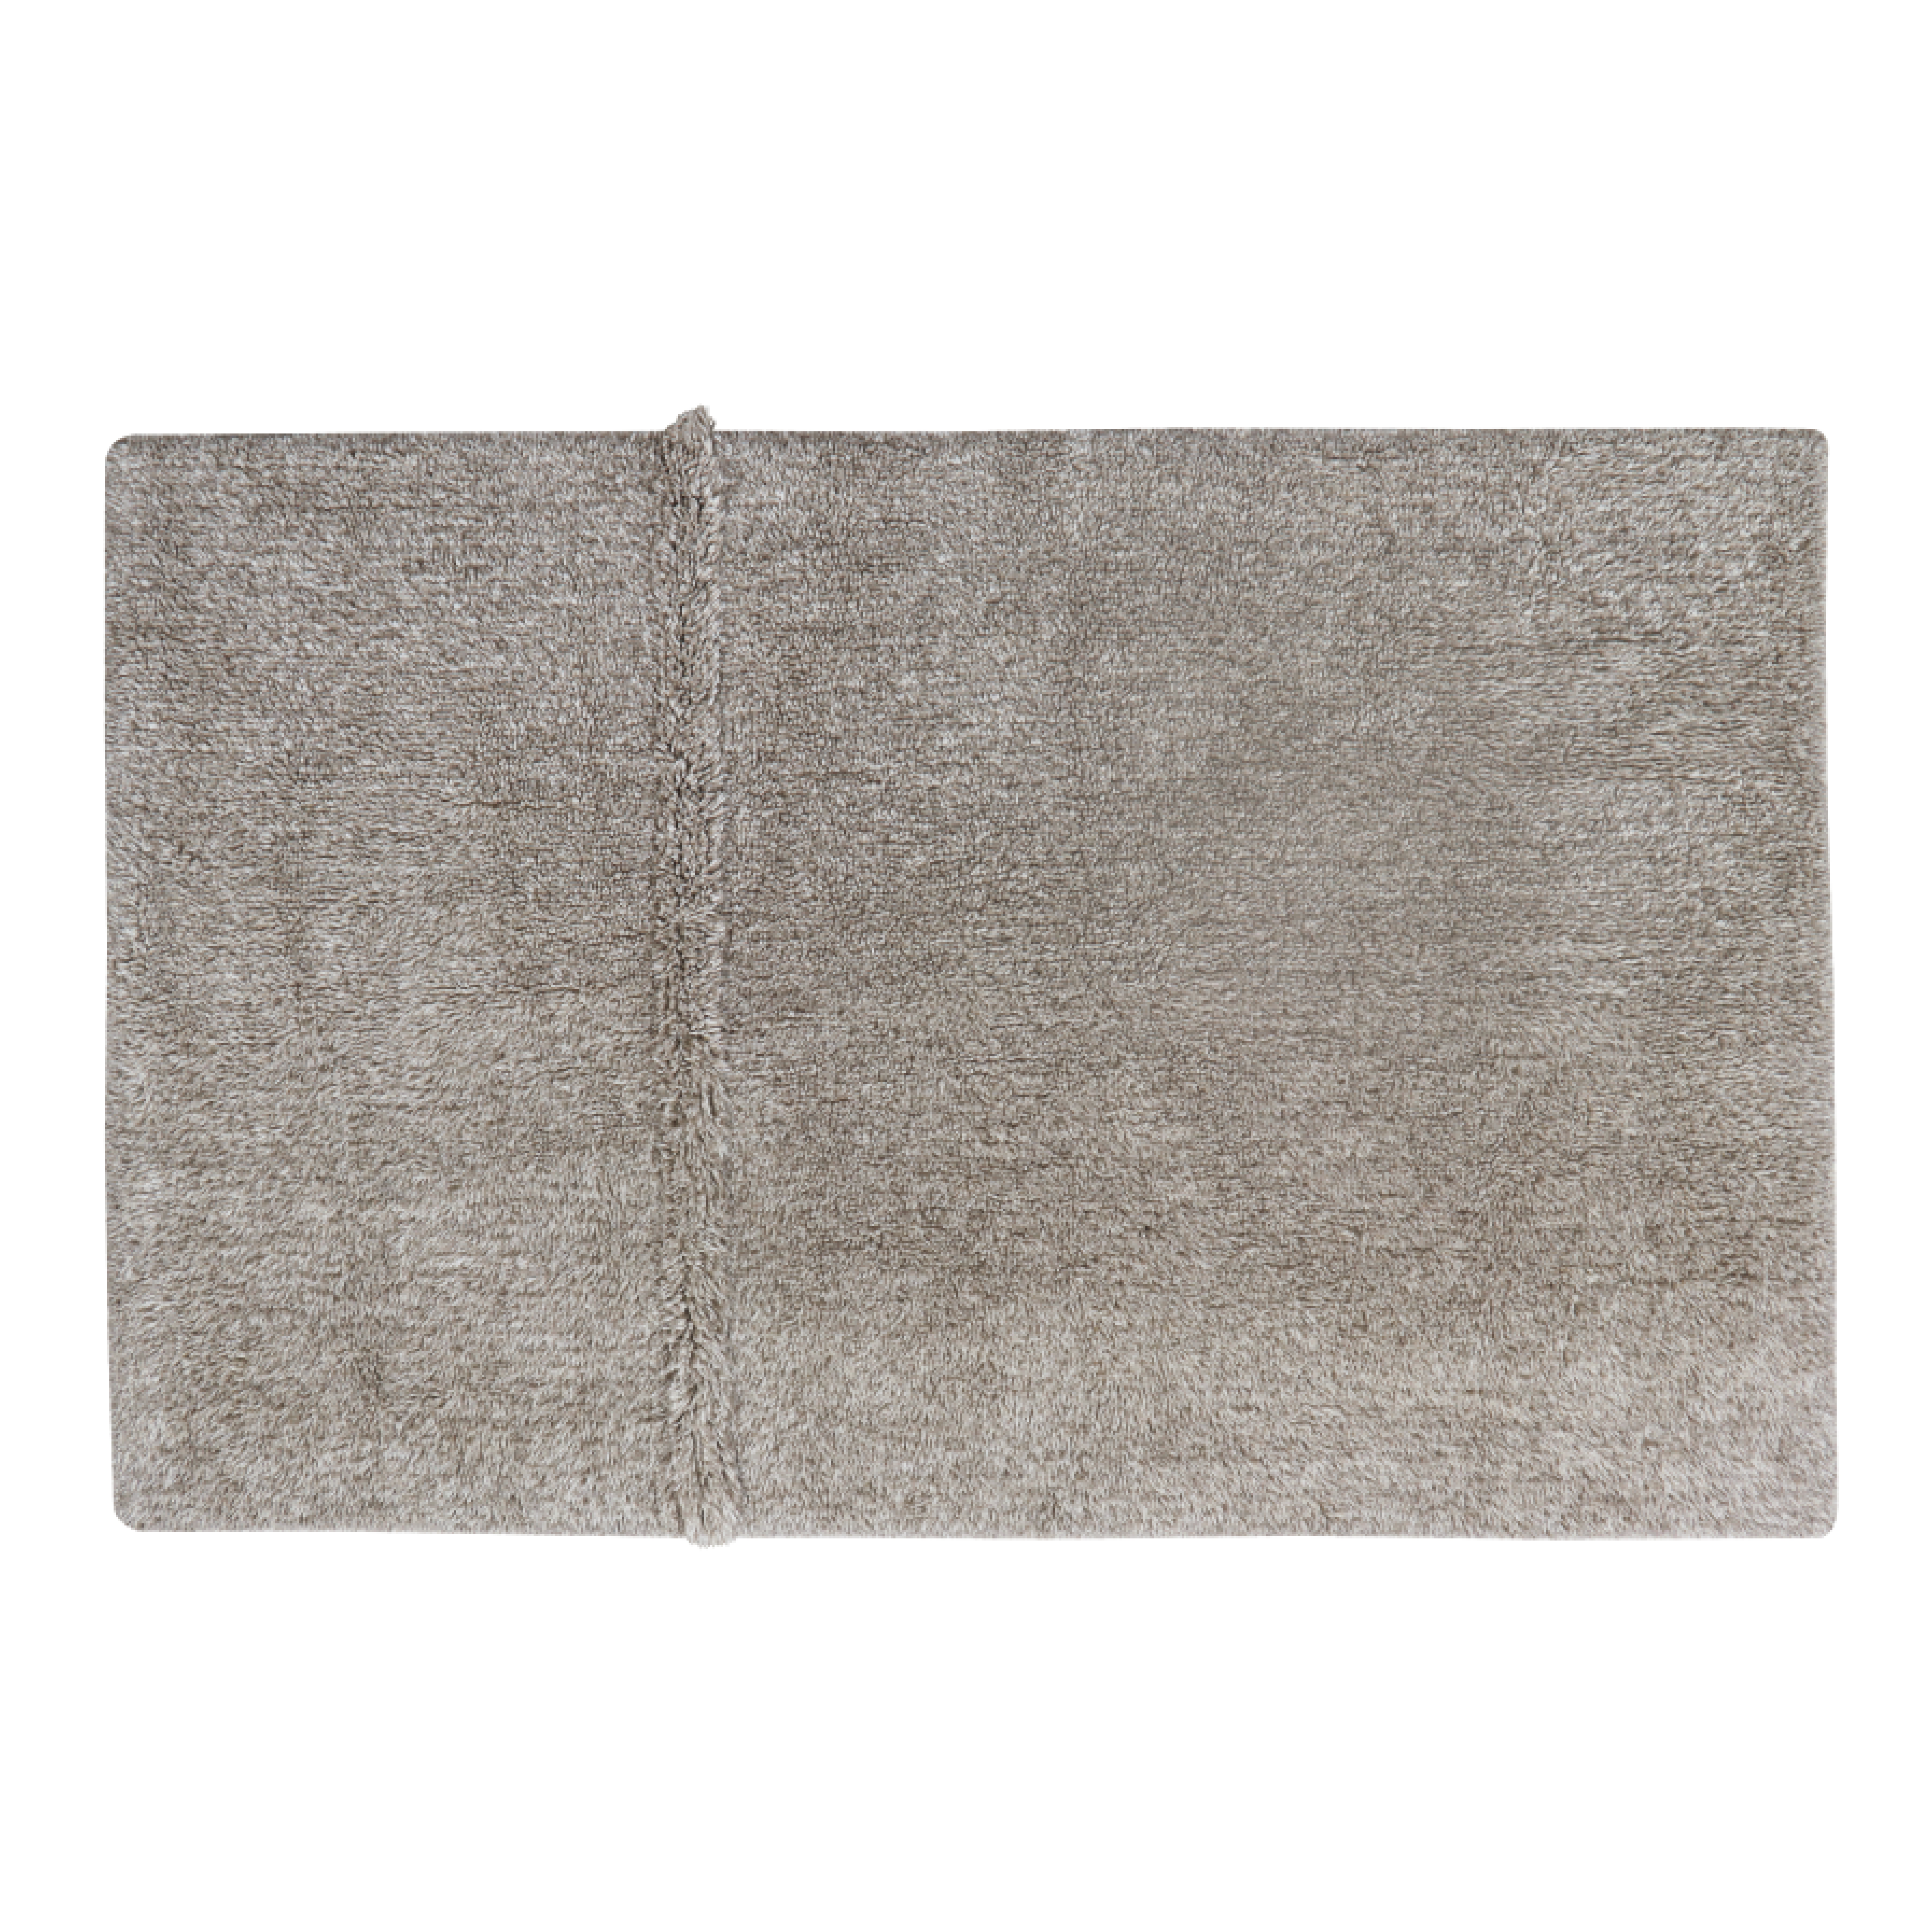 Шерстяной ковер Lorena Canals "Tundra - Blended Sheep", серый, 170 x 240 см